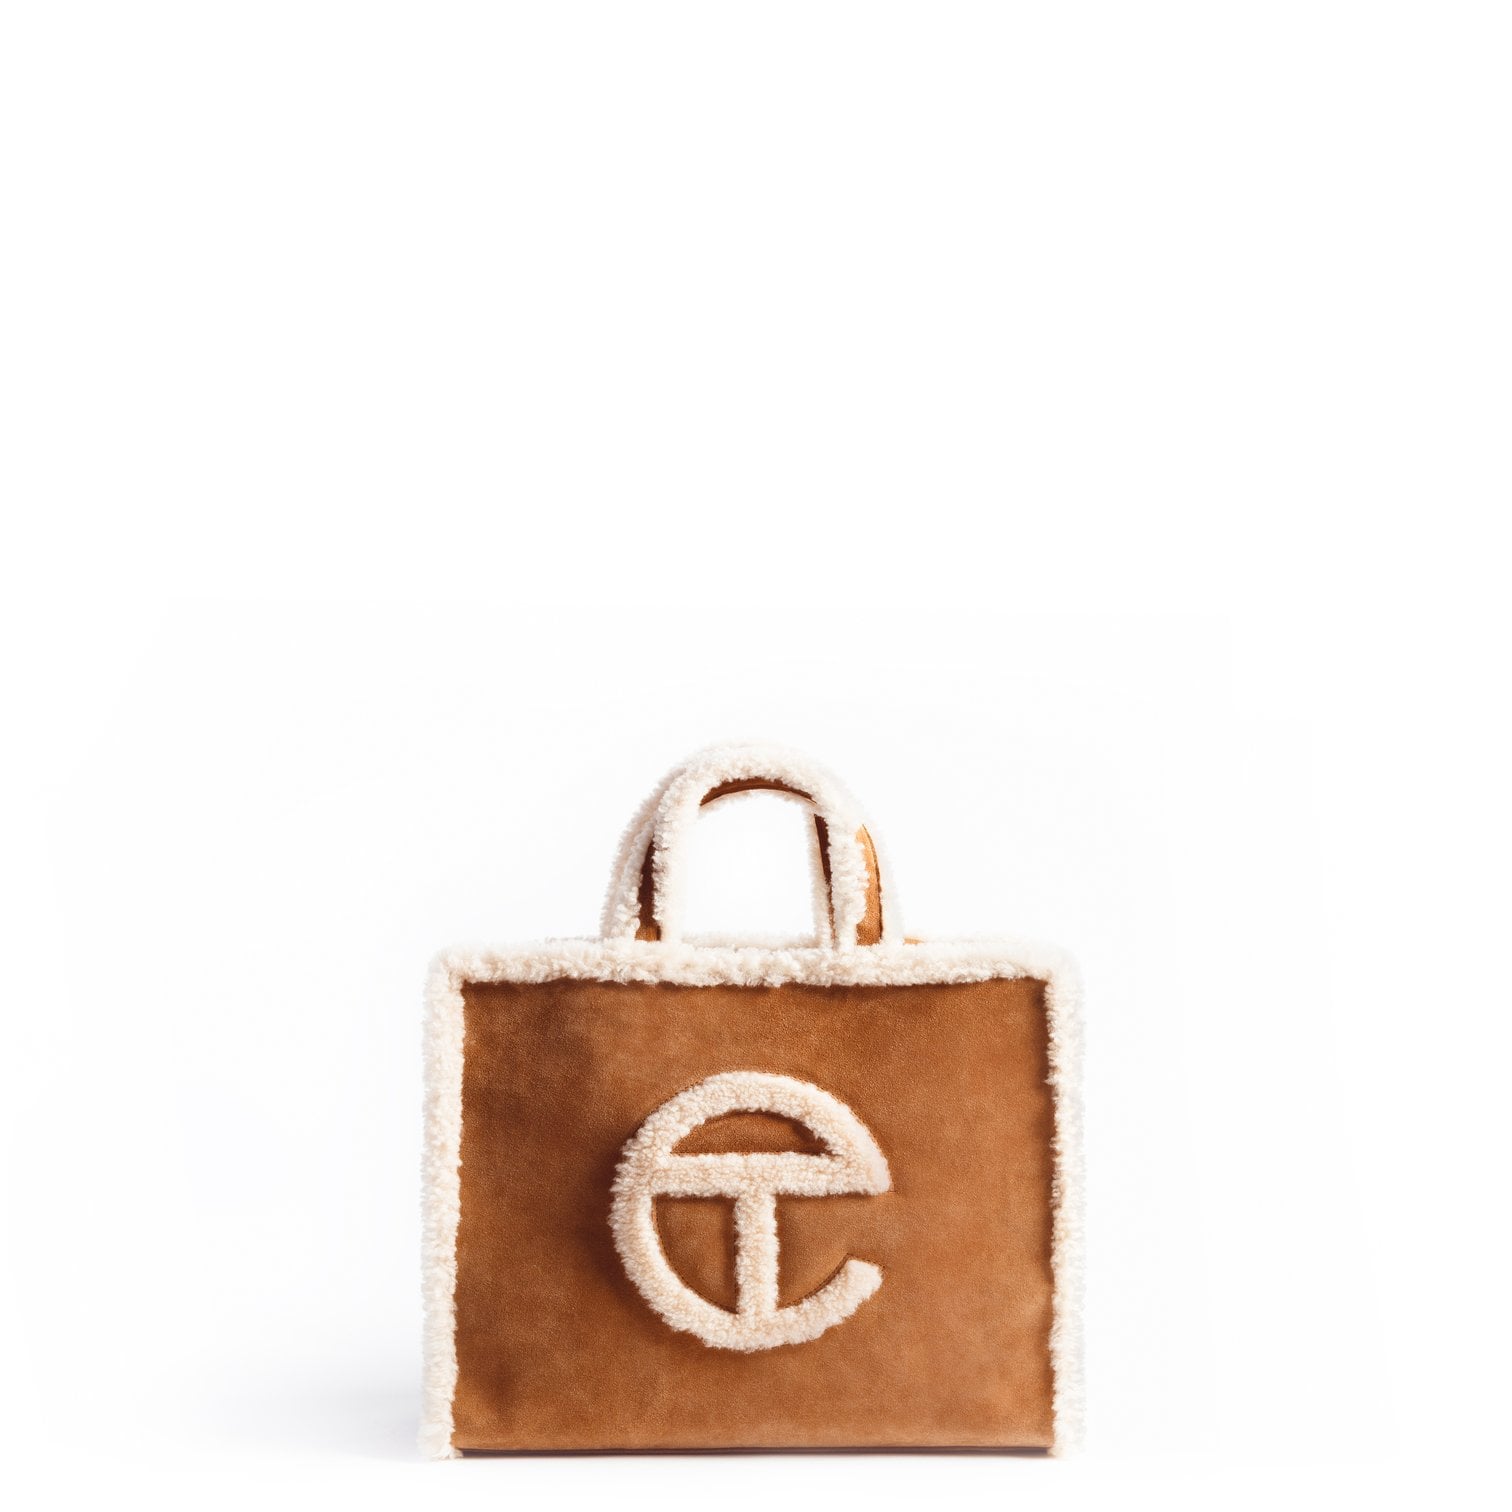 How to Preorder Telfar x UGG's Shopper Bags | POPSUGAR Fashion